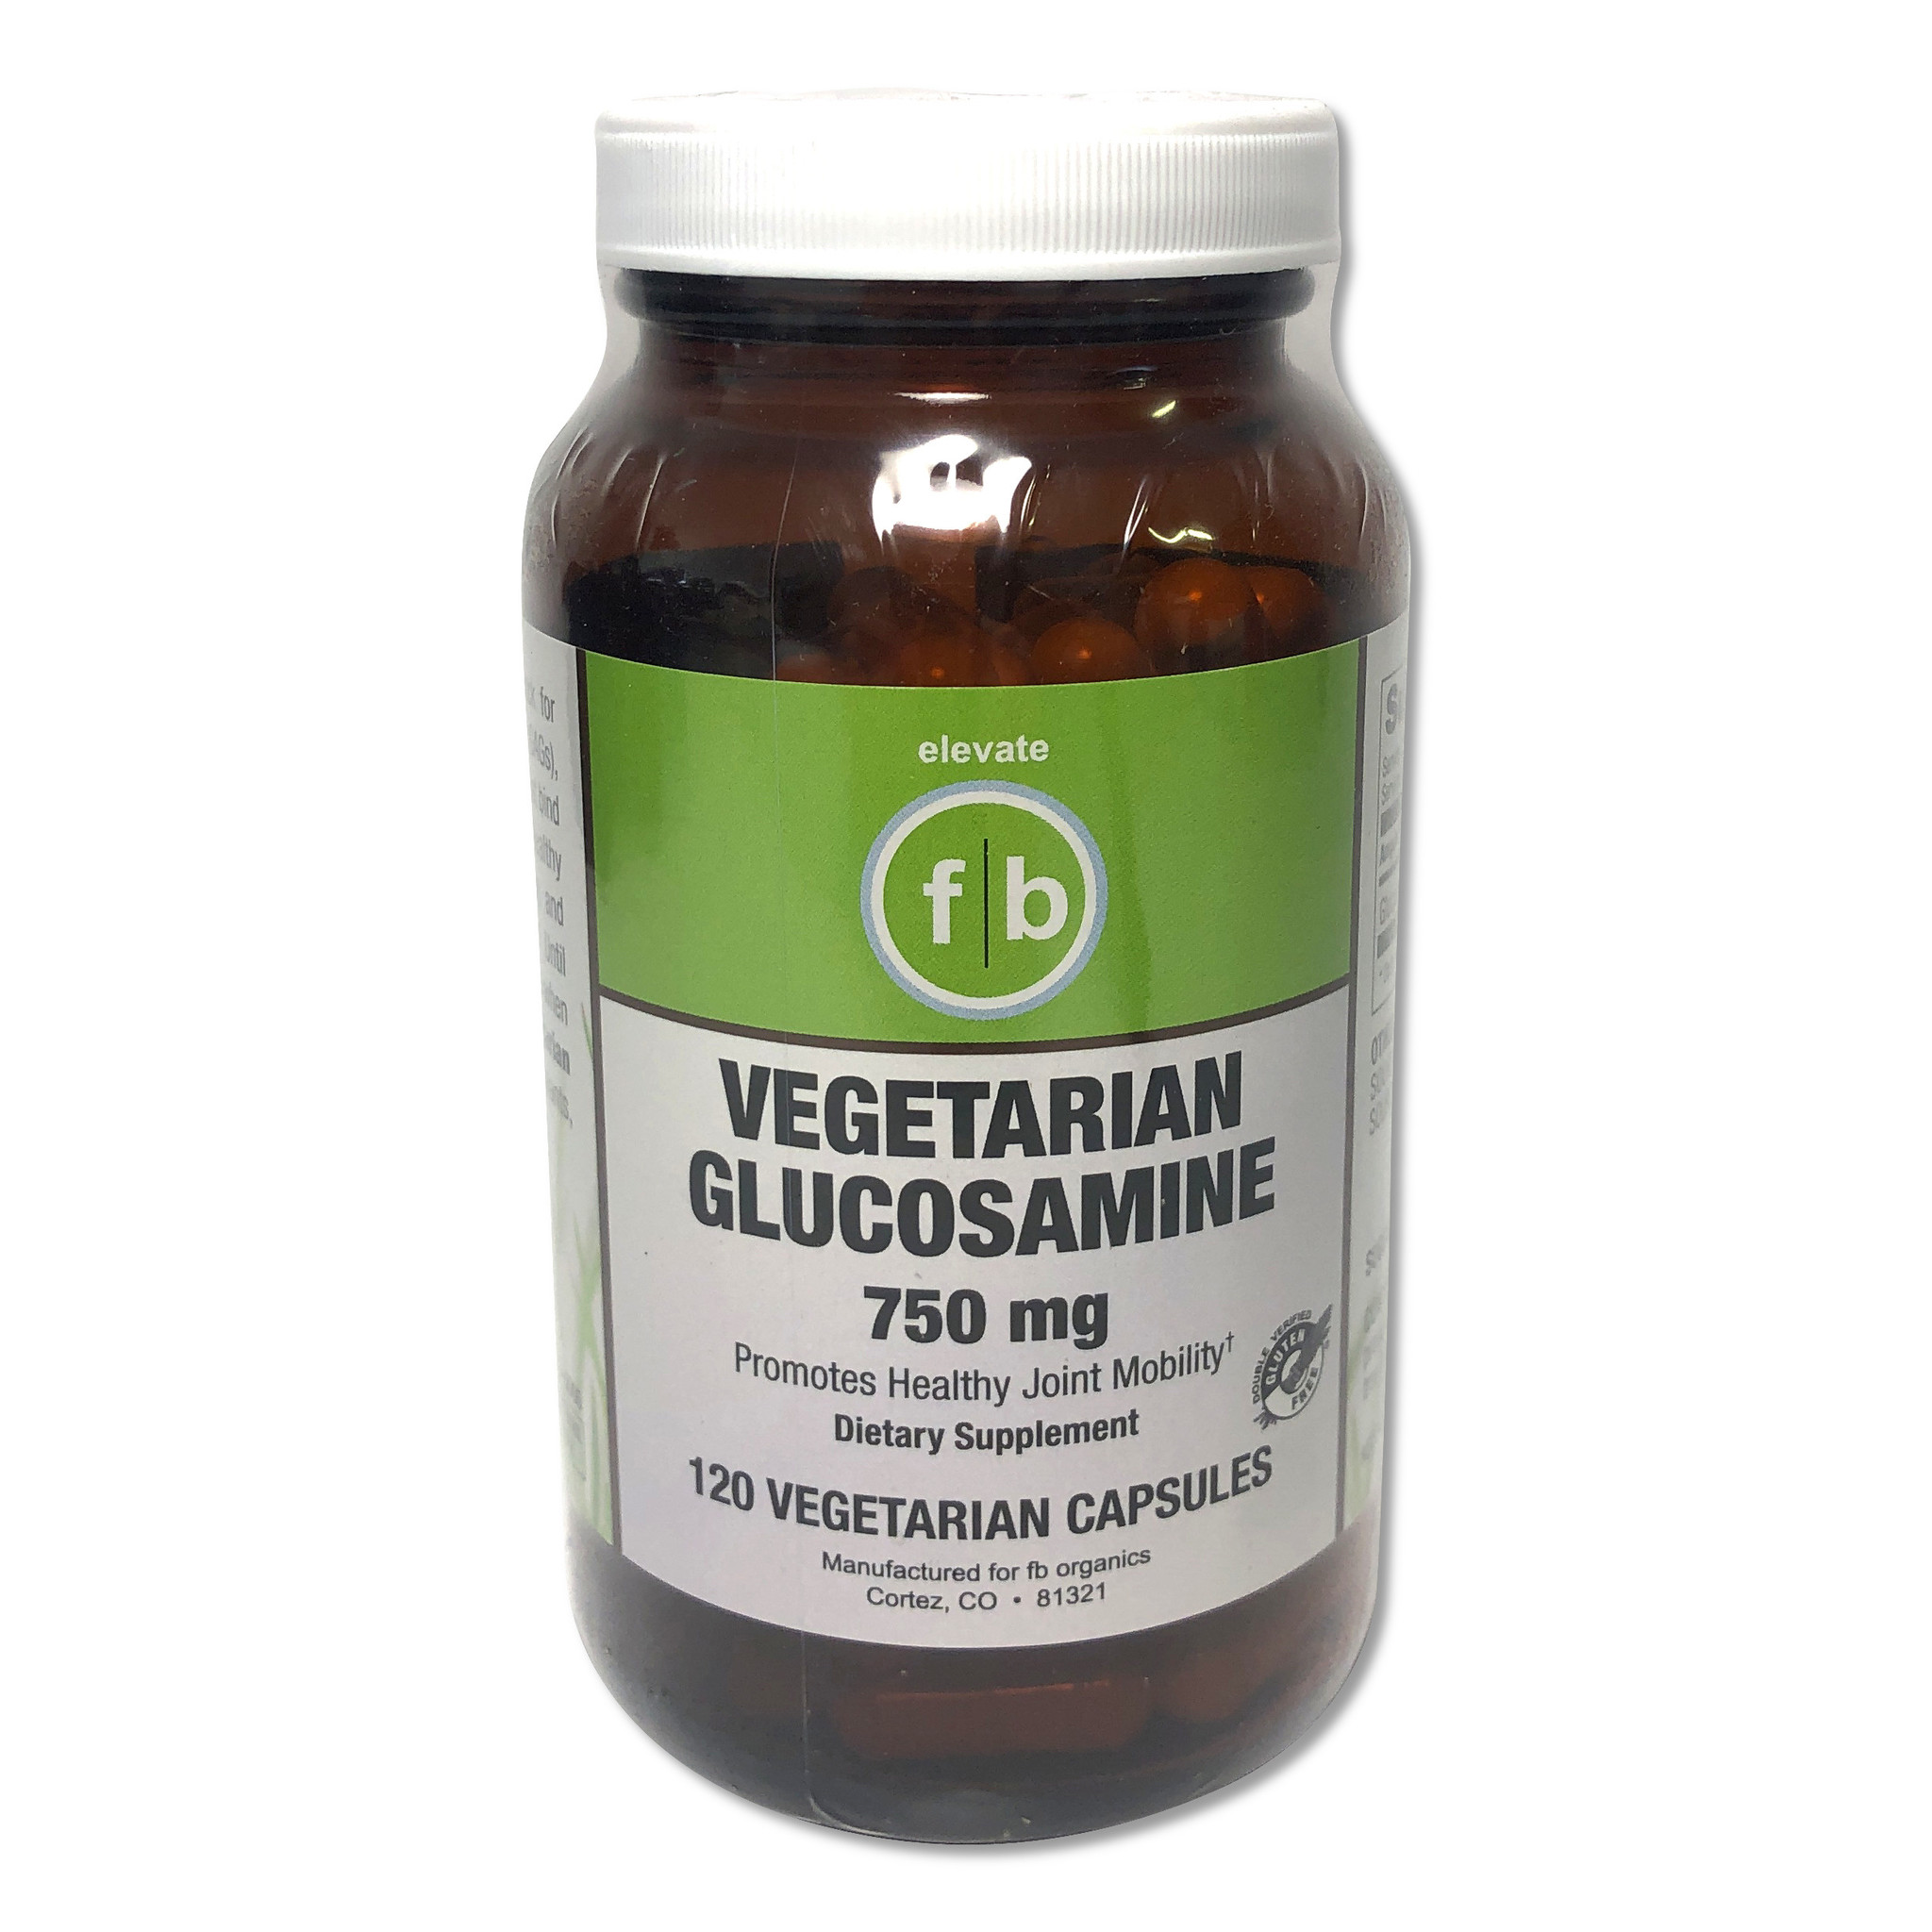 fb VEGETARIAN GLUCOSAMINE 750 mg-1